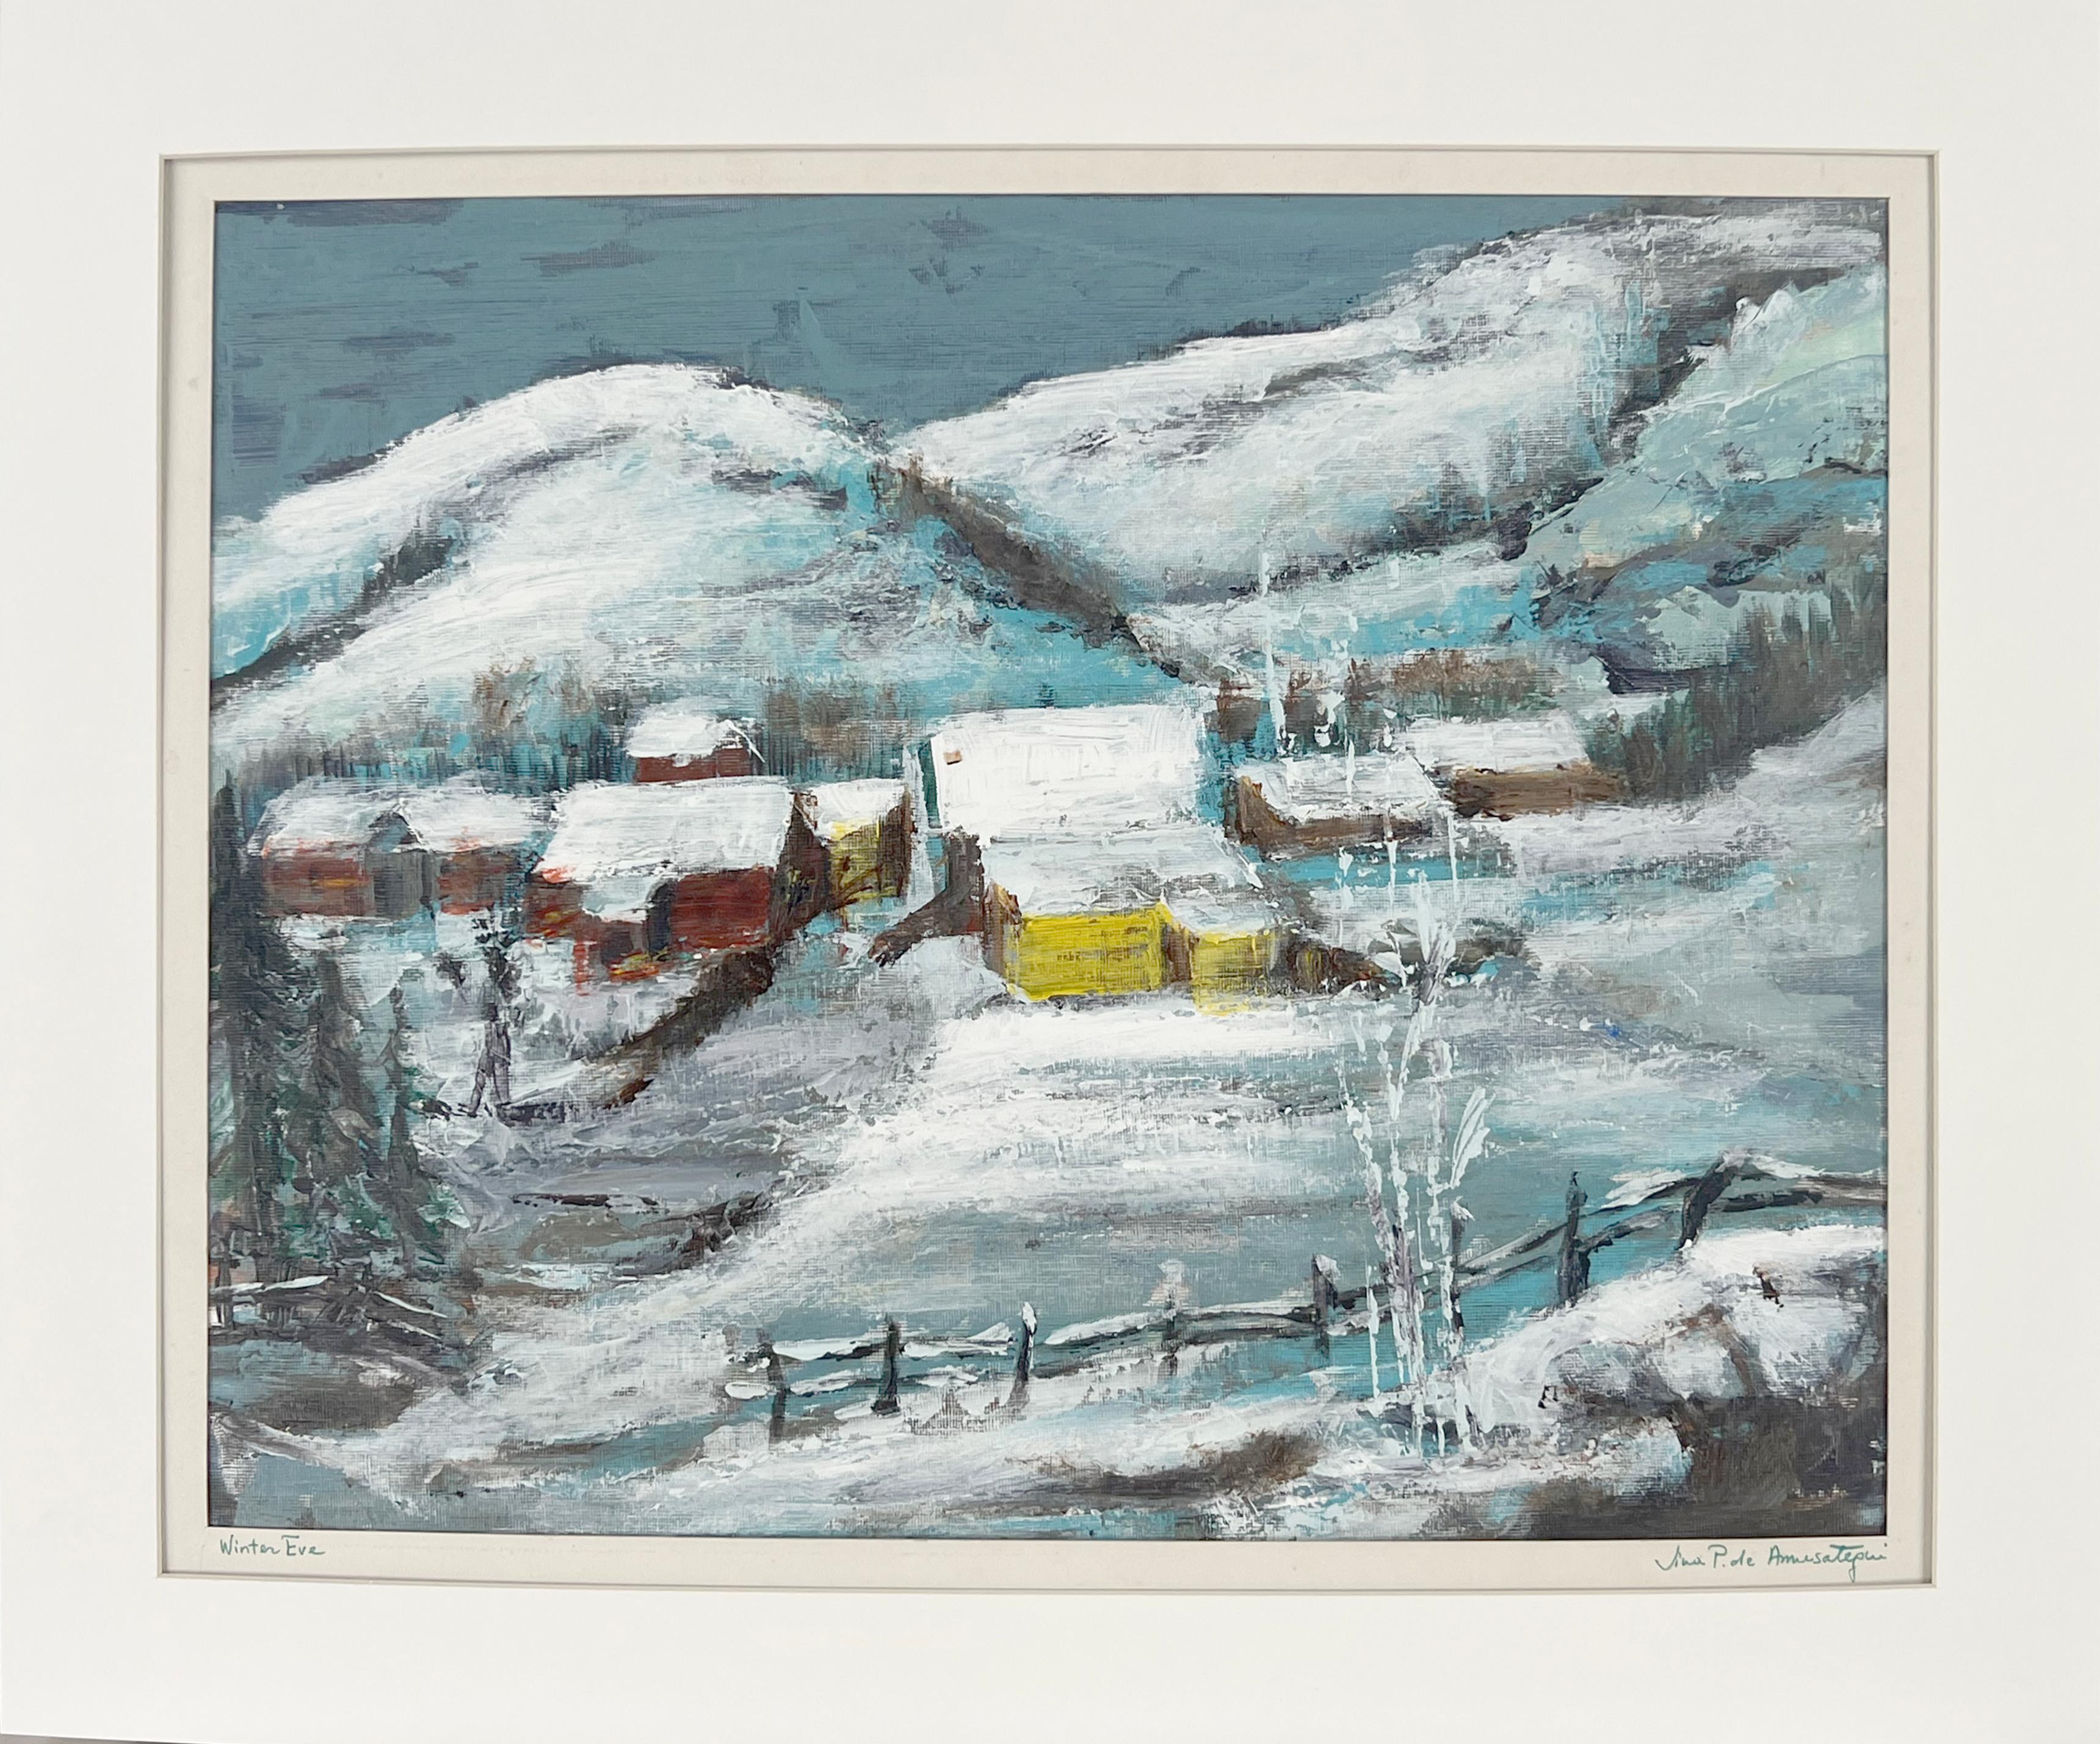 Jina P. de Amusategui Landscape Painting - "Winter Eve" Snow in Santa Fe New Mexico - Oil on Paper